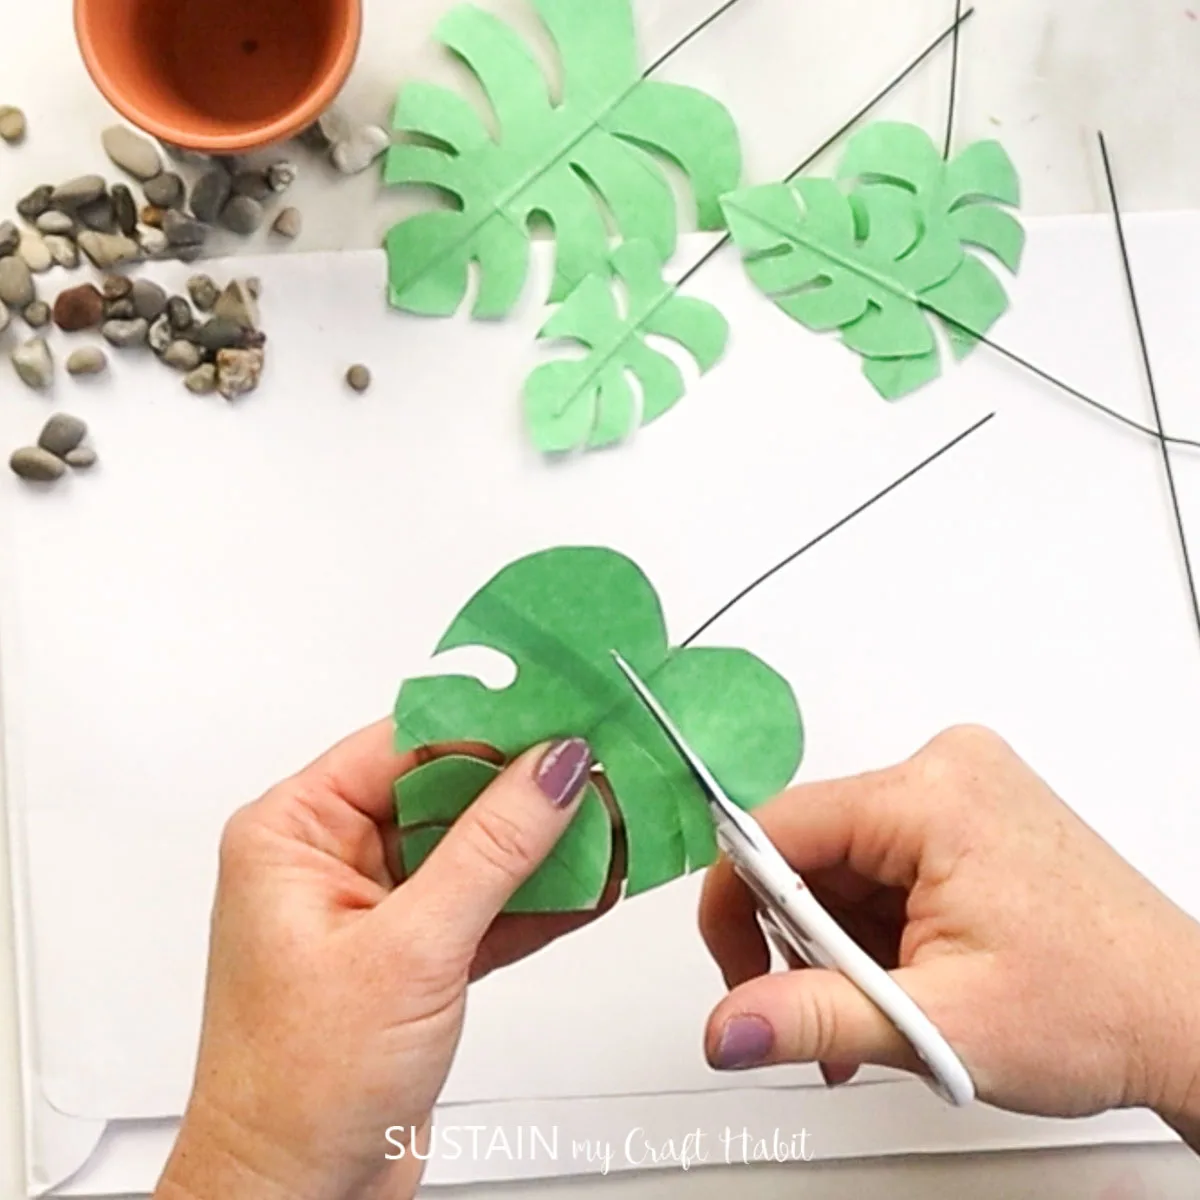 Cutting masking tape to form a leaf shape.